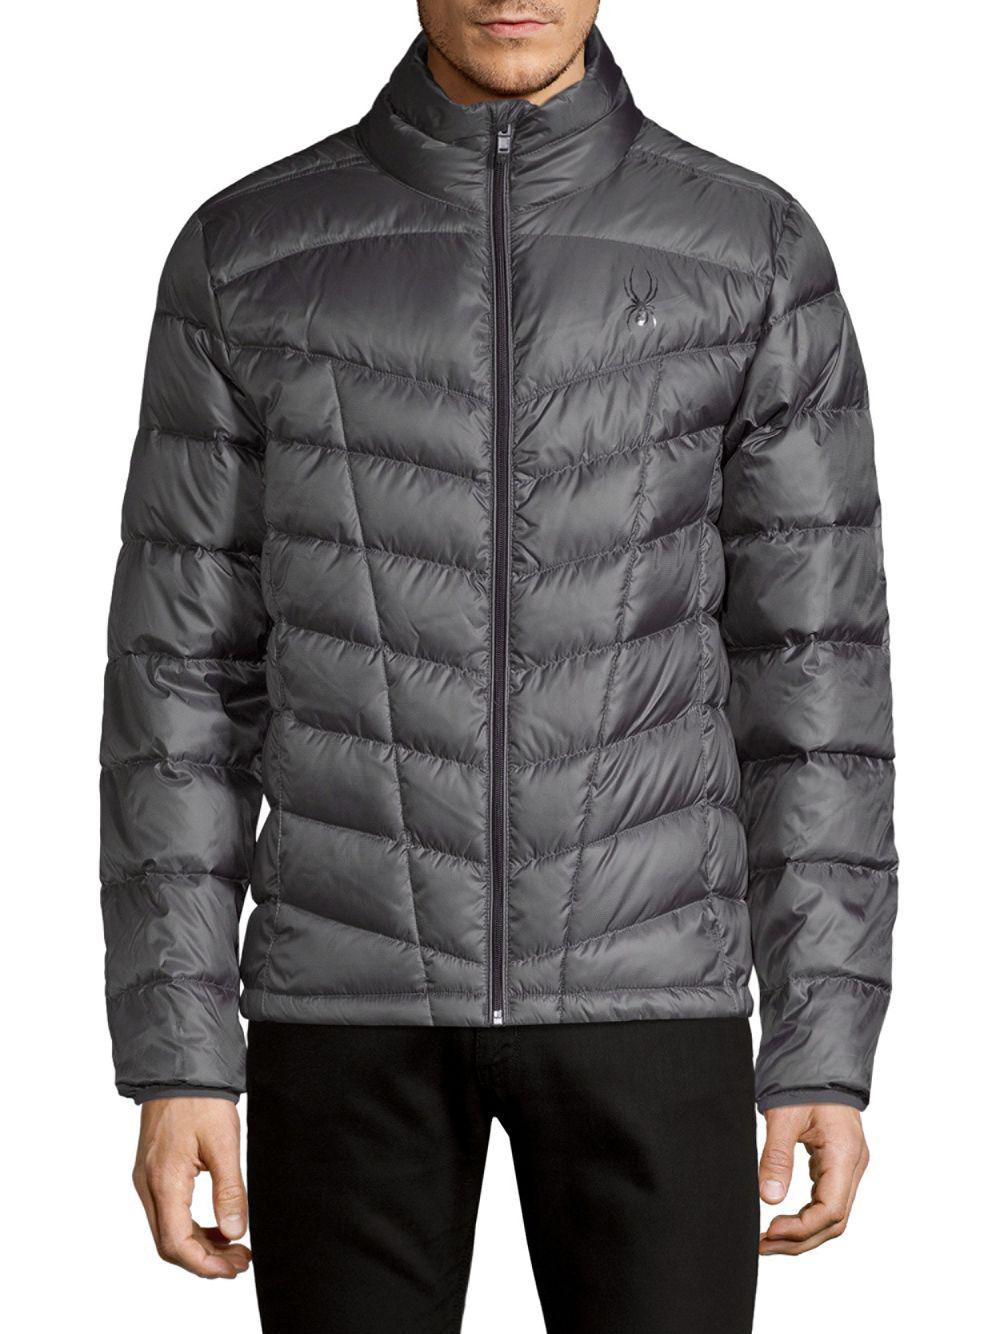 Spyder Synthetic Pelmo Down Puffer Jacket in Gray for Men - Lyst